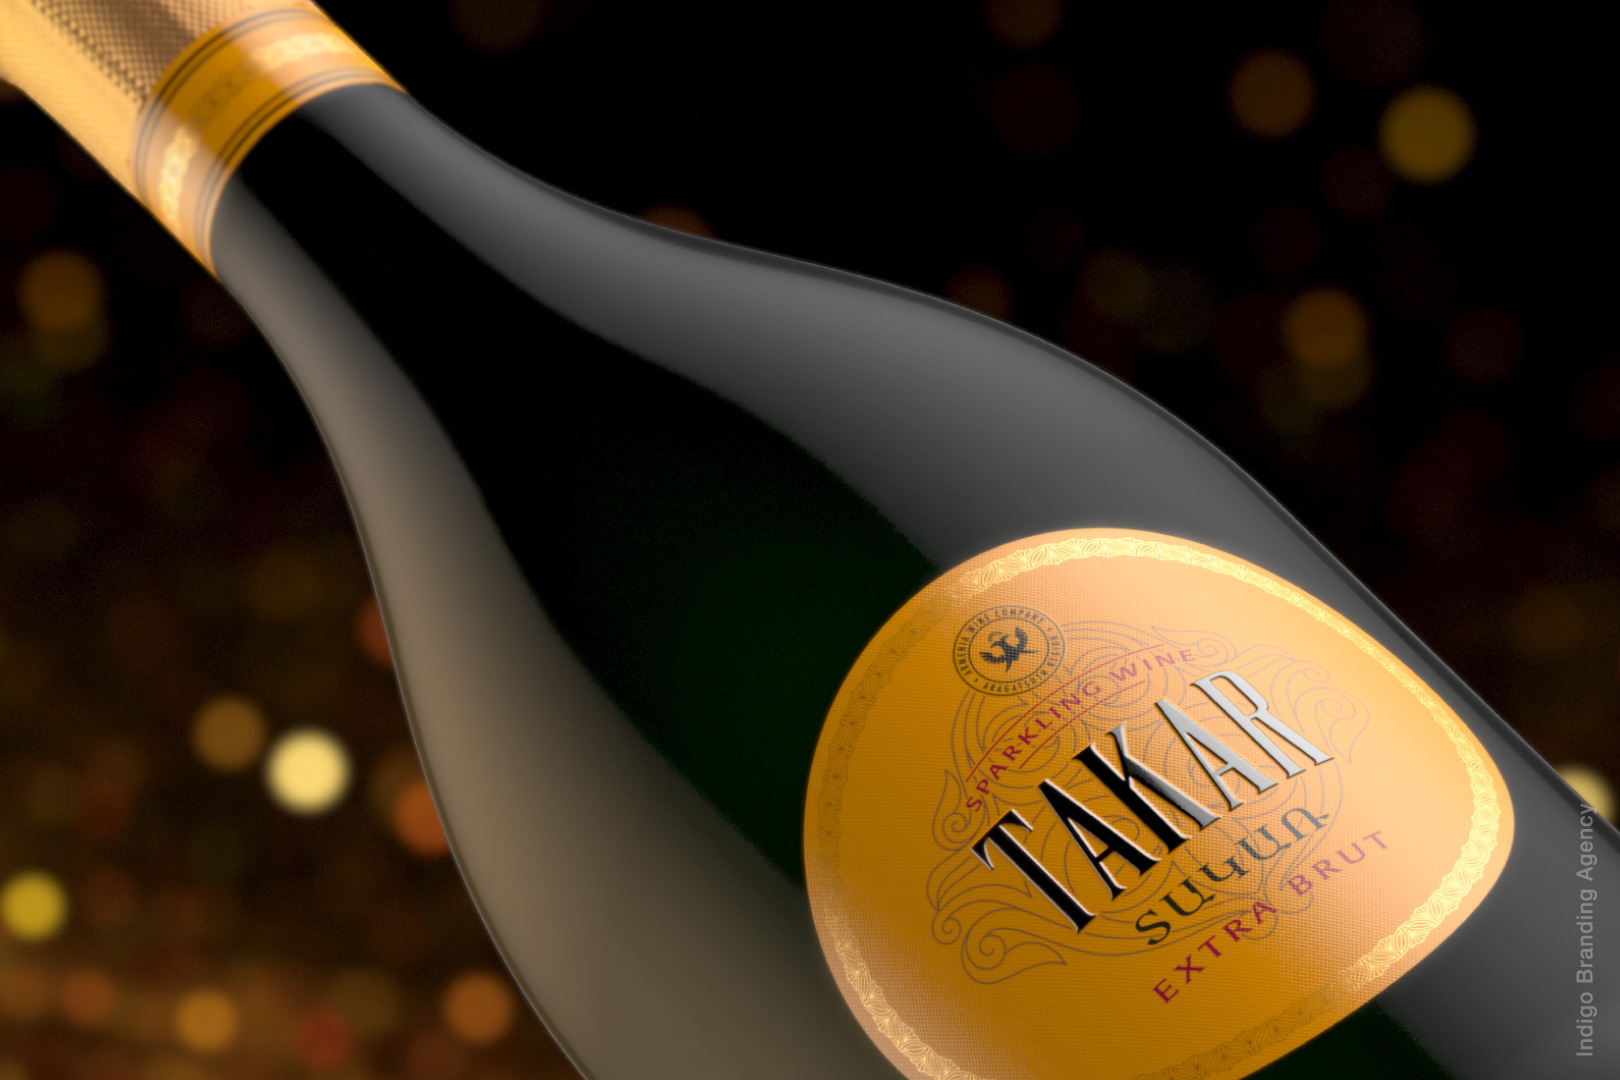 Takar Sparkling Wine branding and labeling by Indigo branding